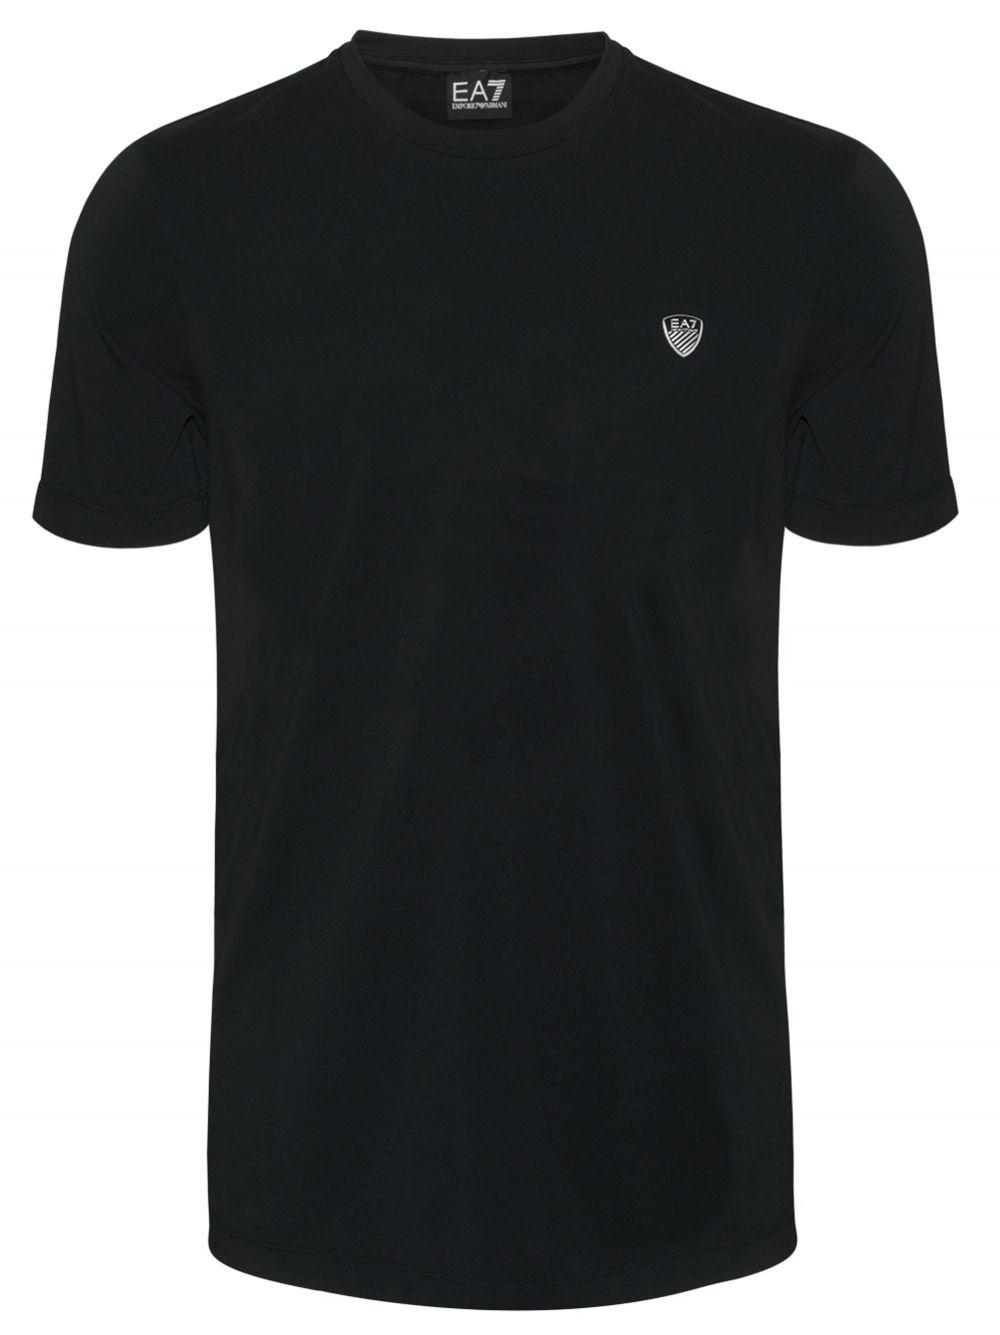 Black Shield Logo - EA7 Black Shield Logo T-shirt | Designerwear